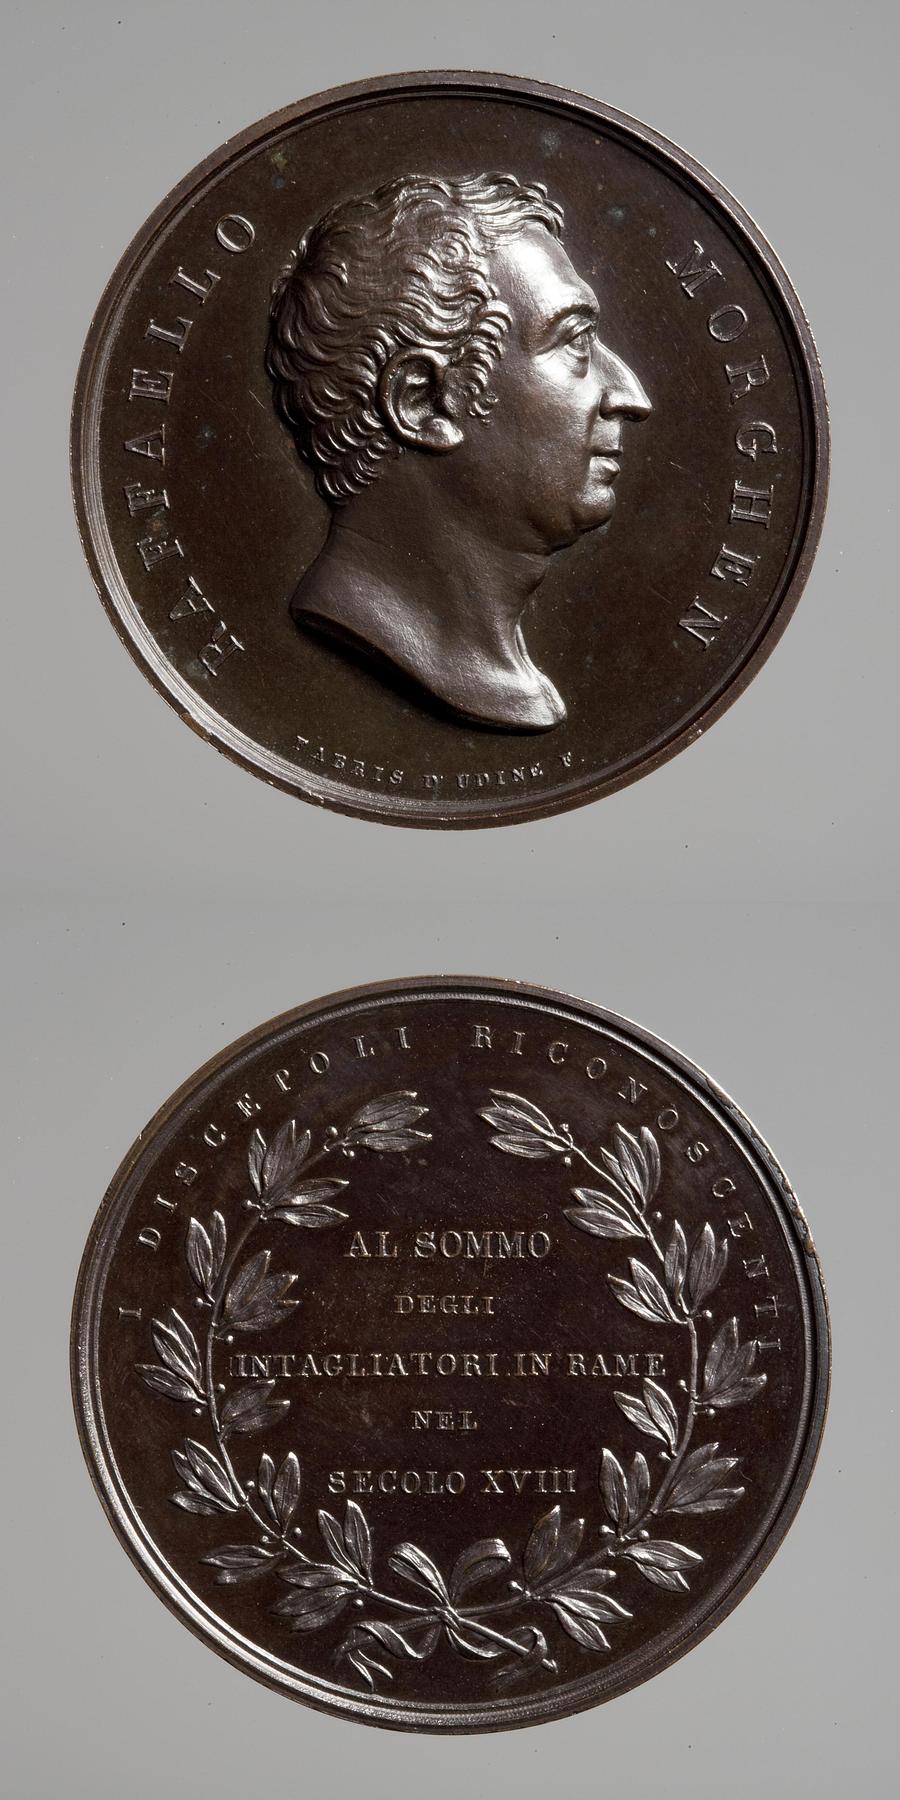 Medaljens forside: Raphael Morghen. Medaljens bagside: Laurbærgrene og inskription, F60